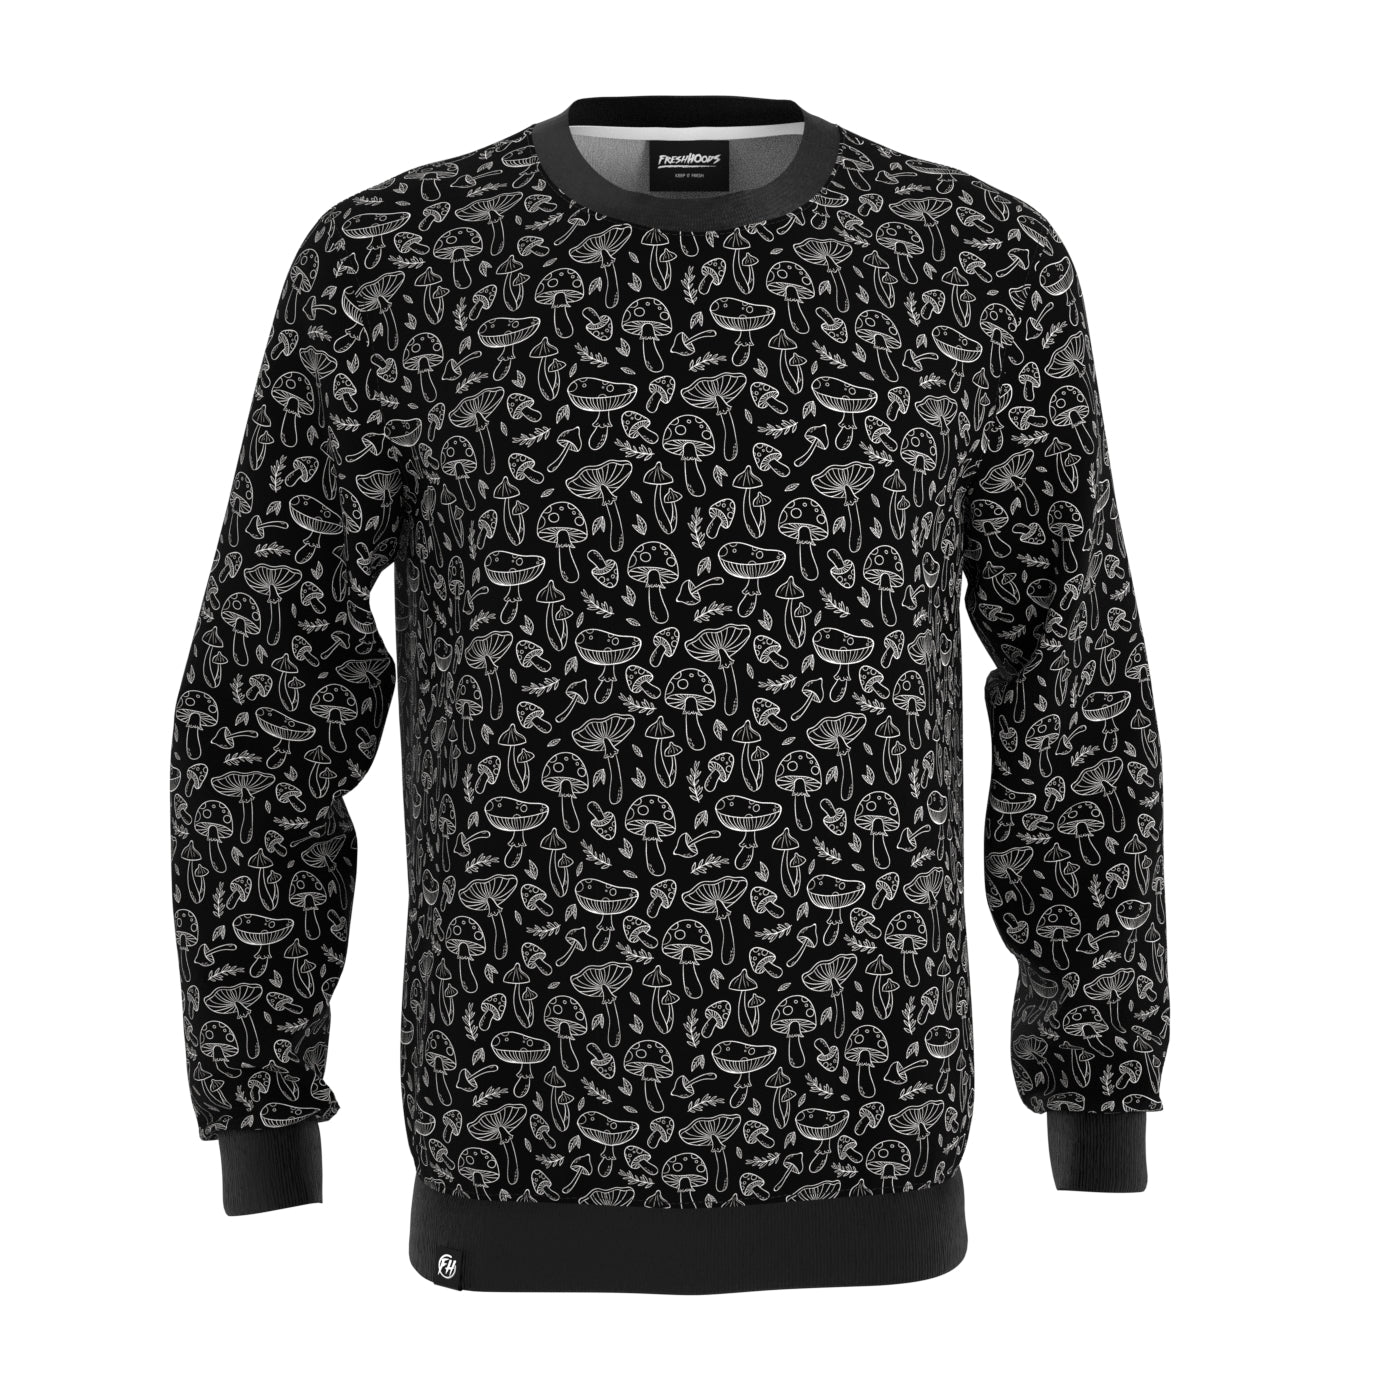 Black 'n' White Mushrooms Sweatshirt